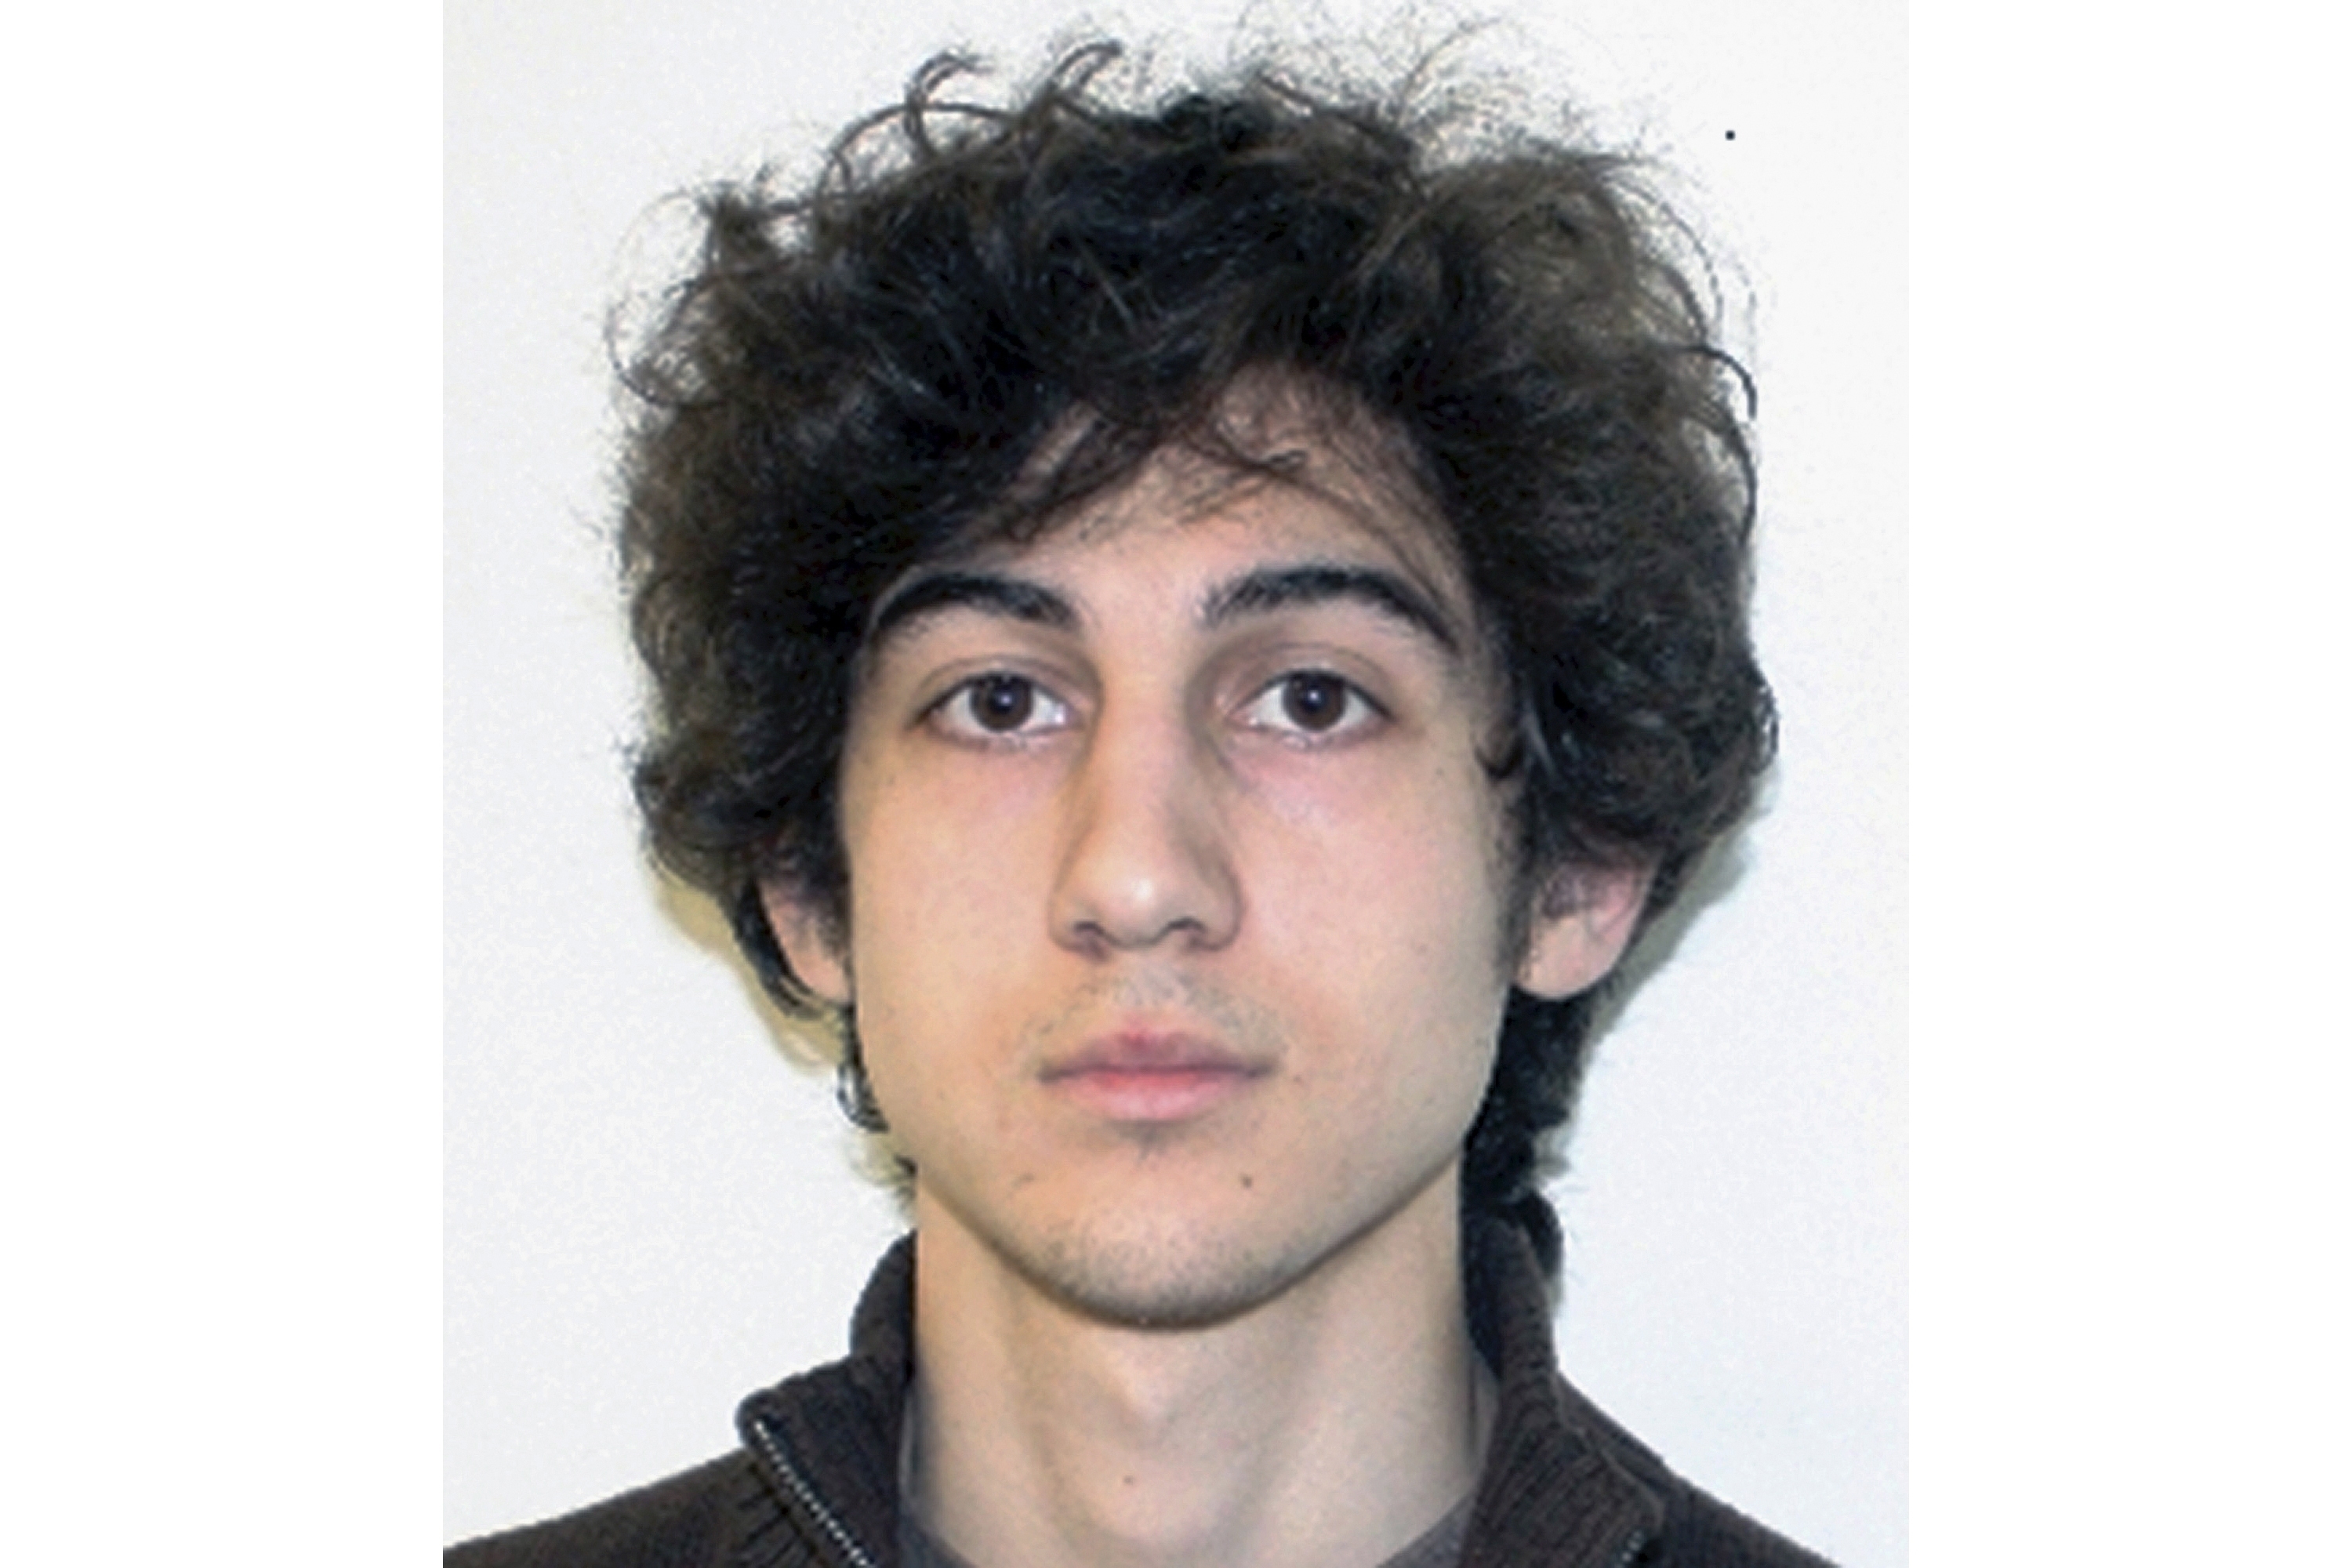 Appeals judges improperly threw out Tsarnaev’s death sentence